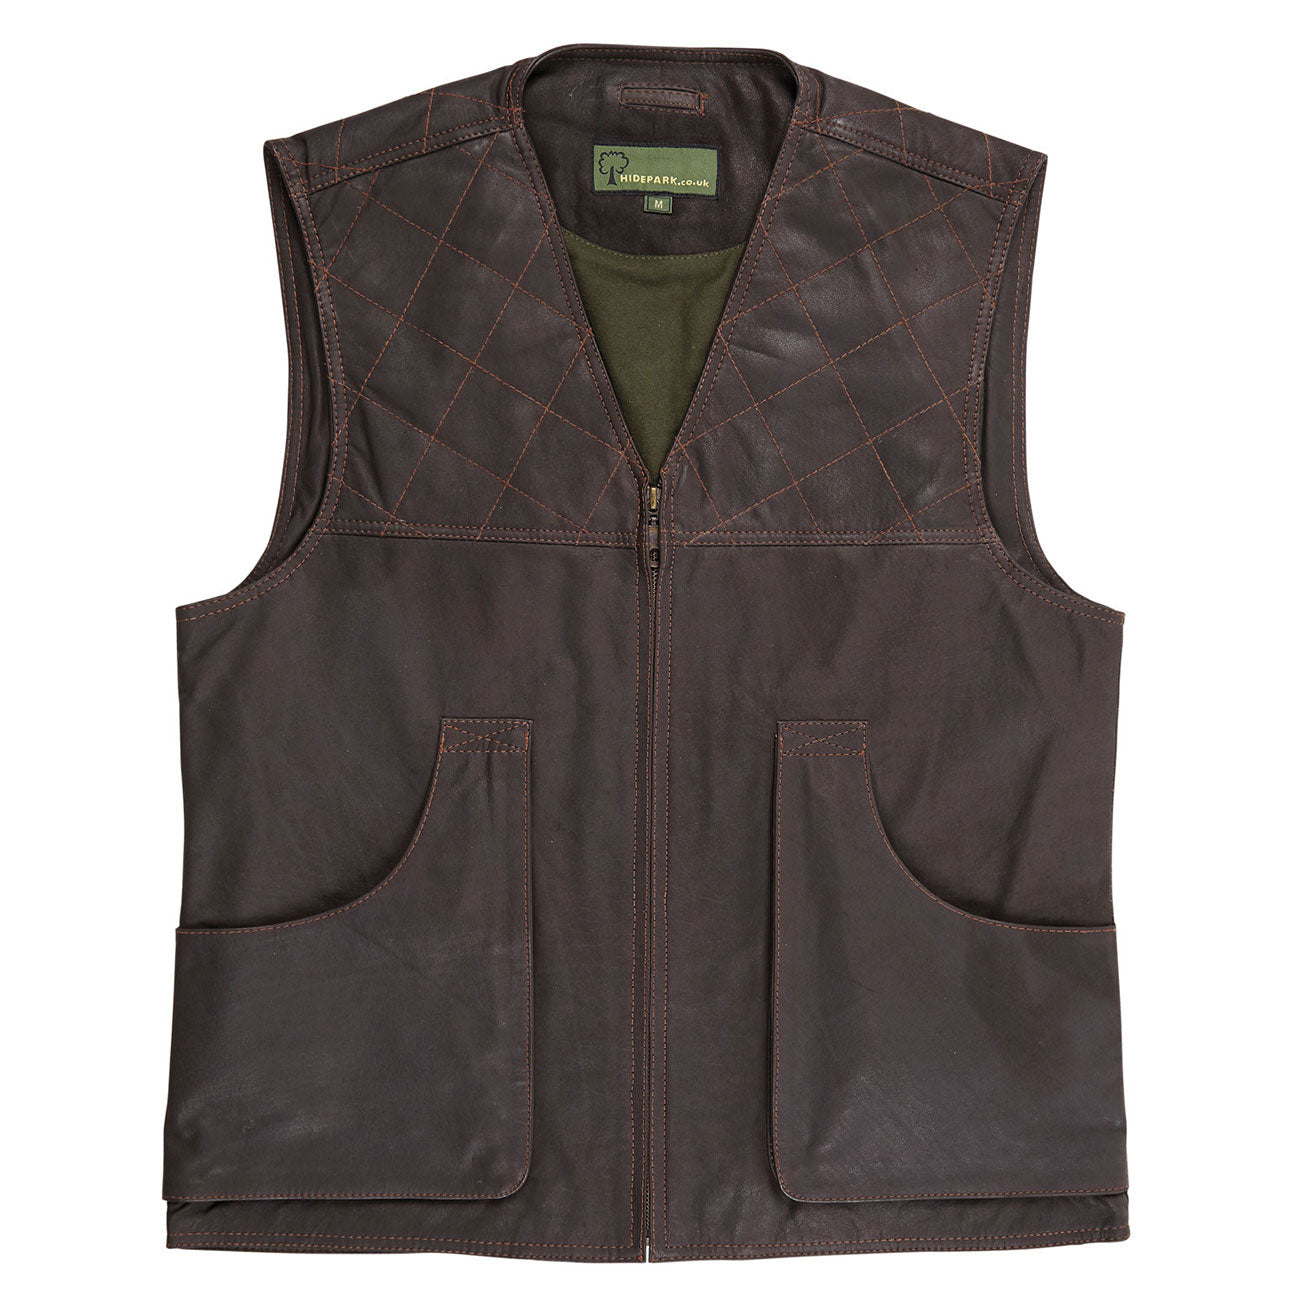 GO12: Men's Brown Leather Shooting Vest